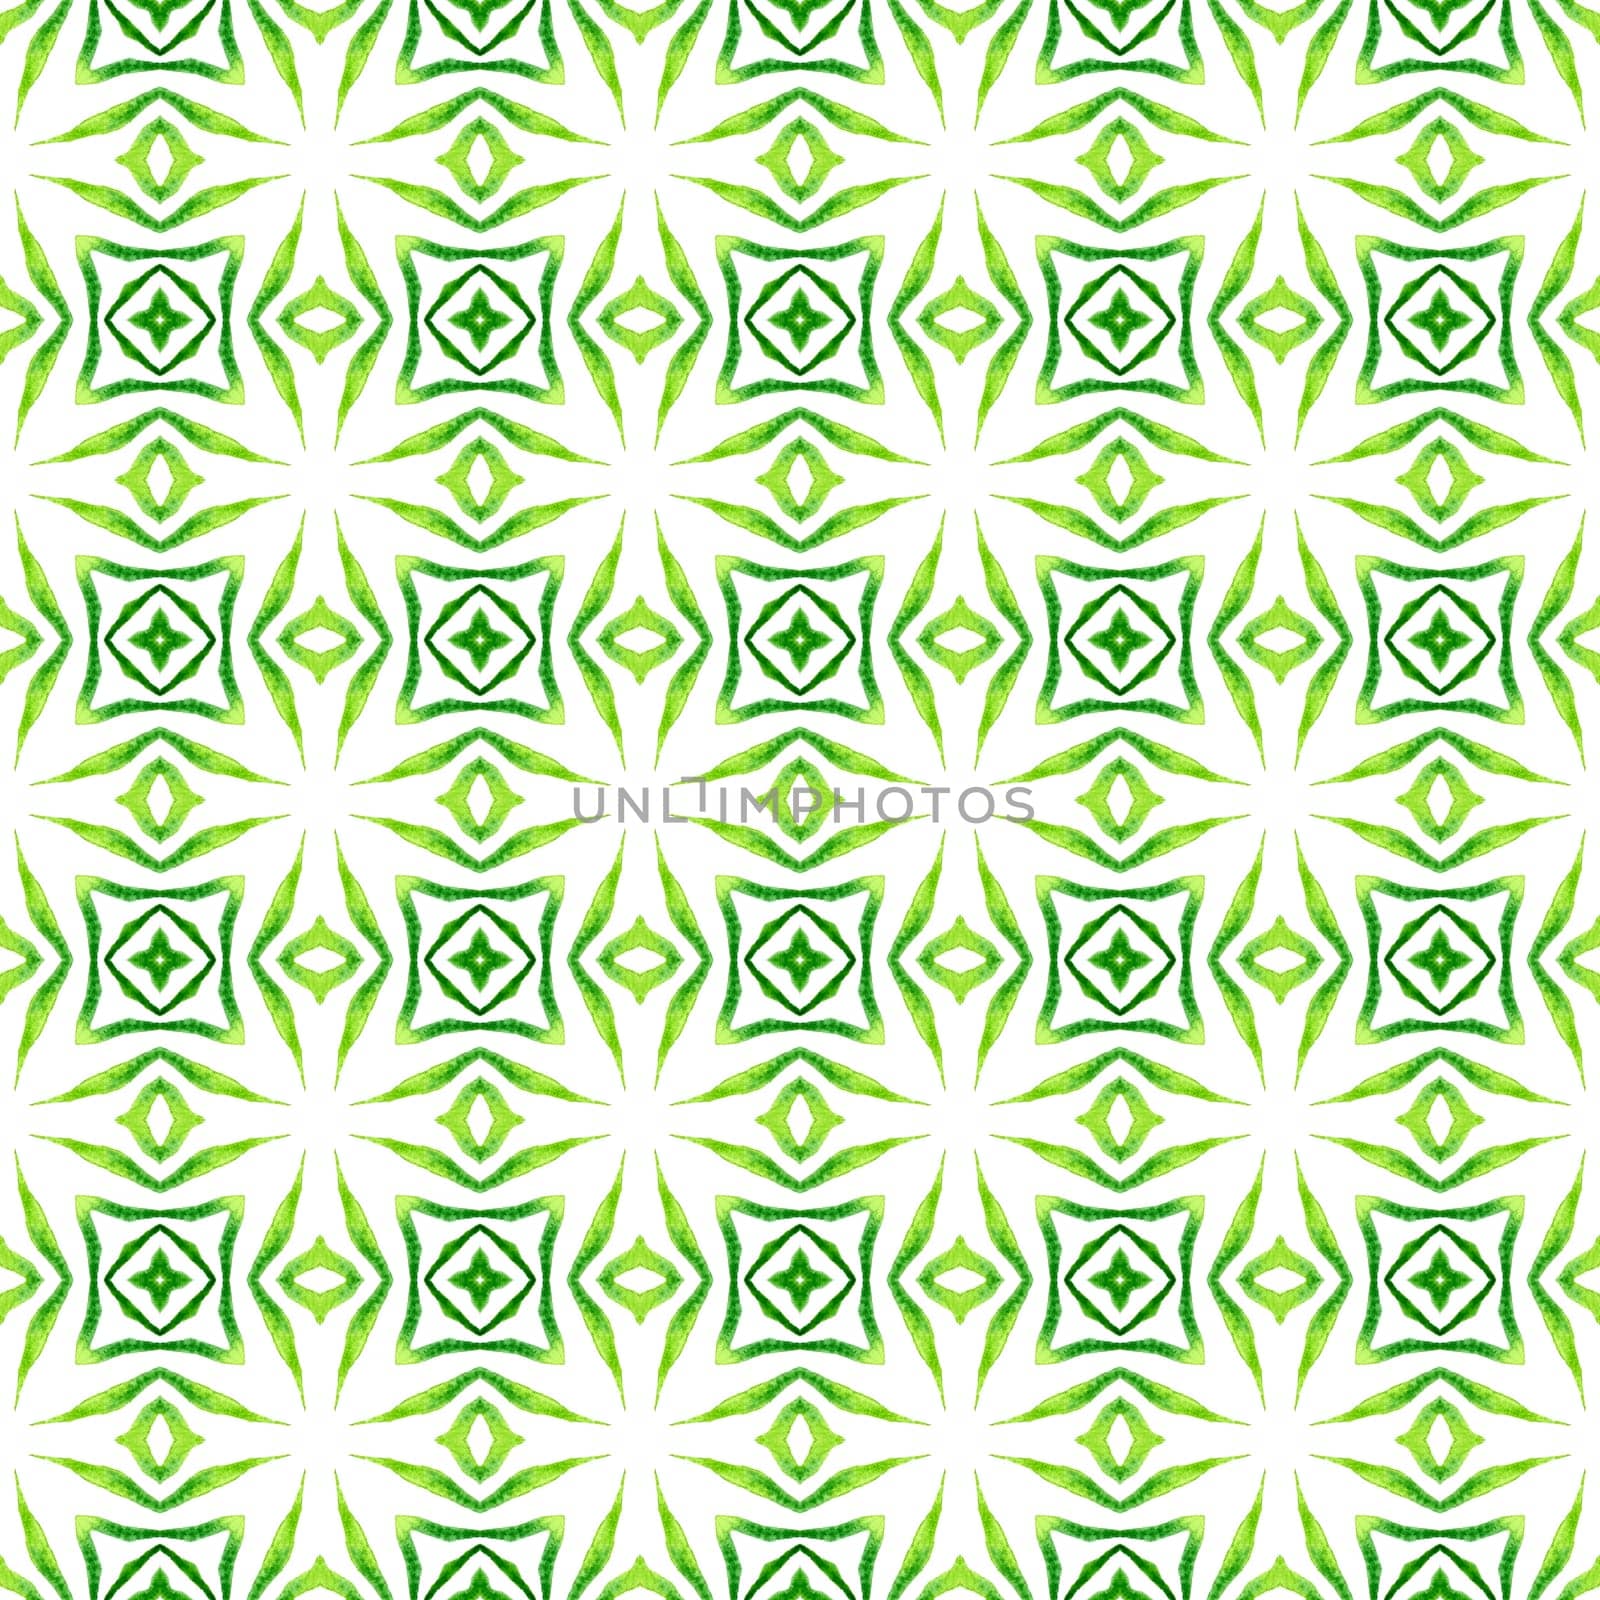 Chevron watercolor pattern. Green wondrous boho by beginagain